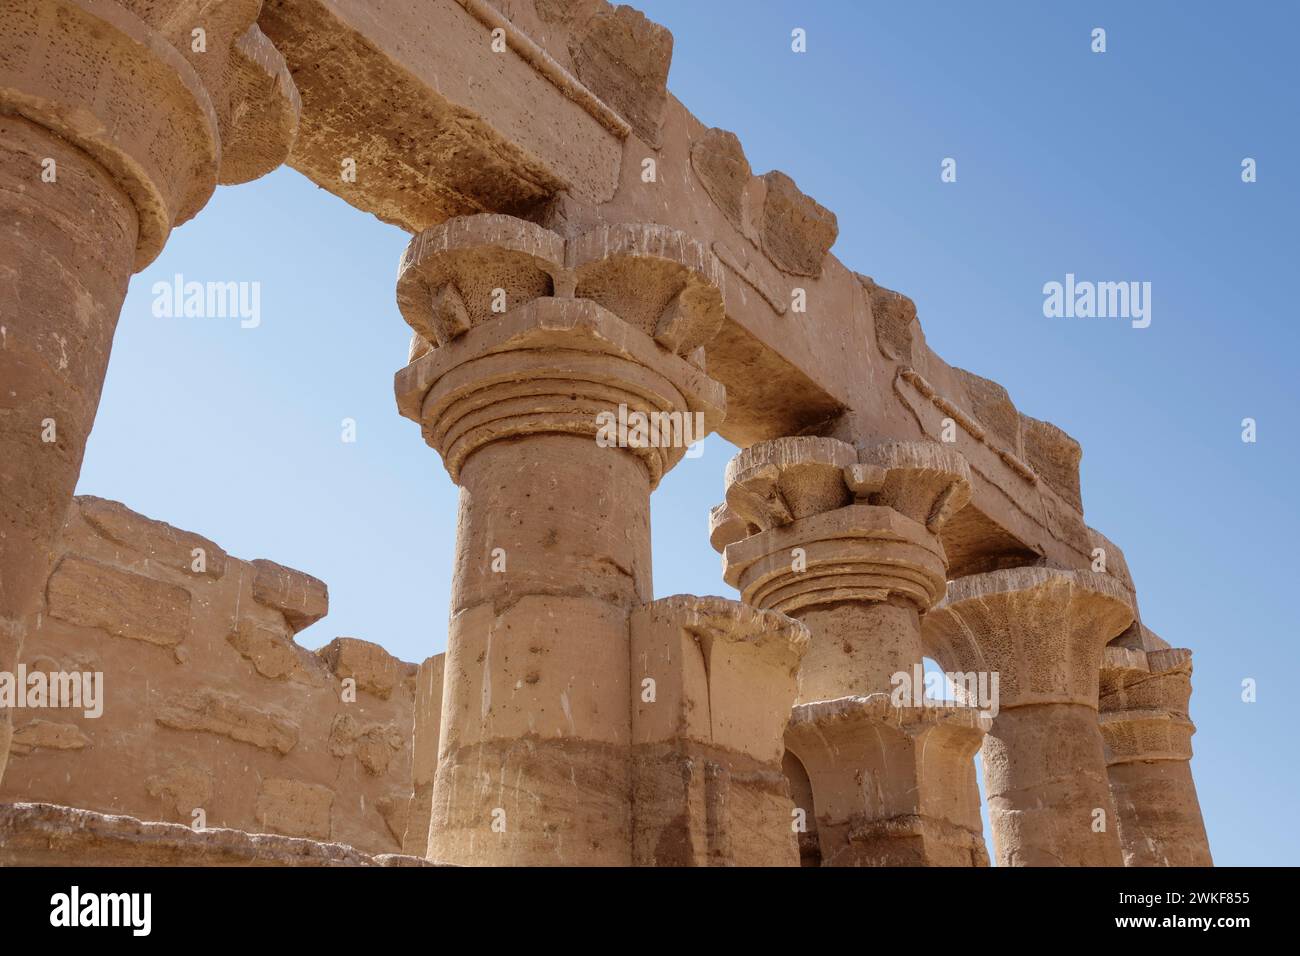 The Temple of Maharraqa on Lake Nasser, Egypt Stock Photo